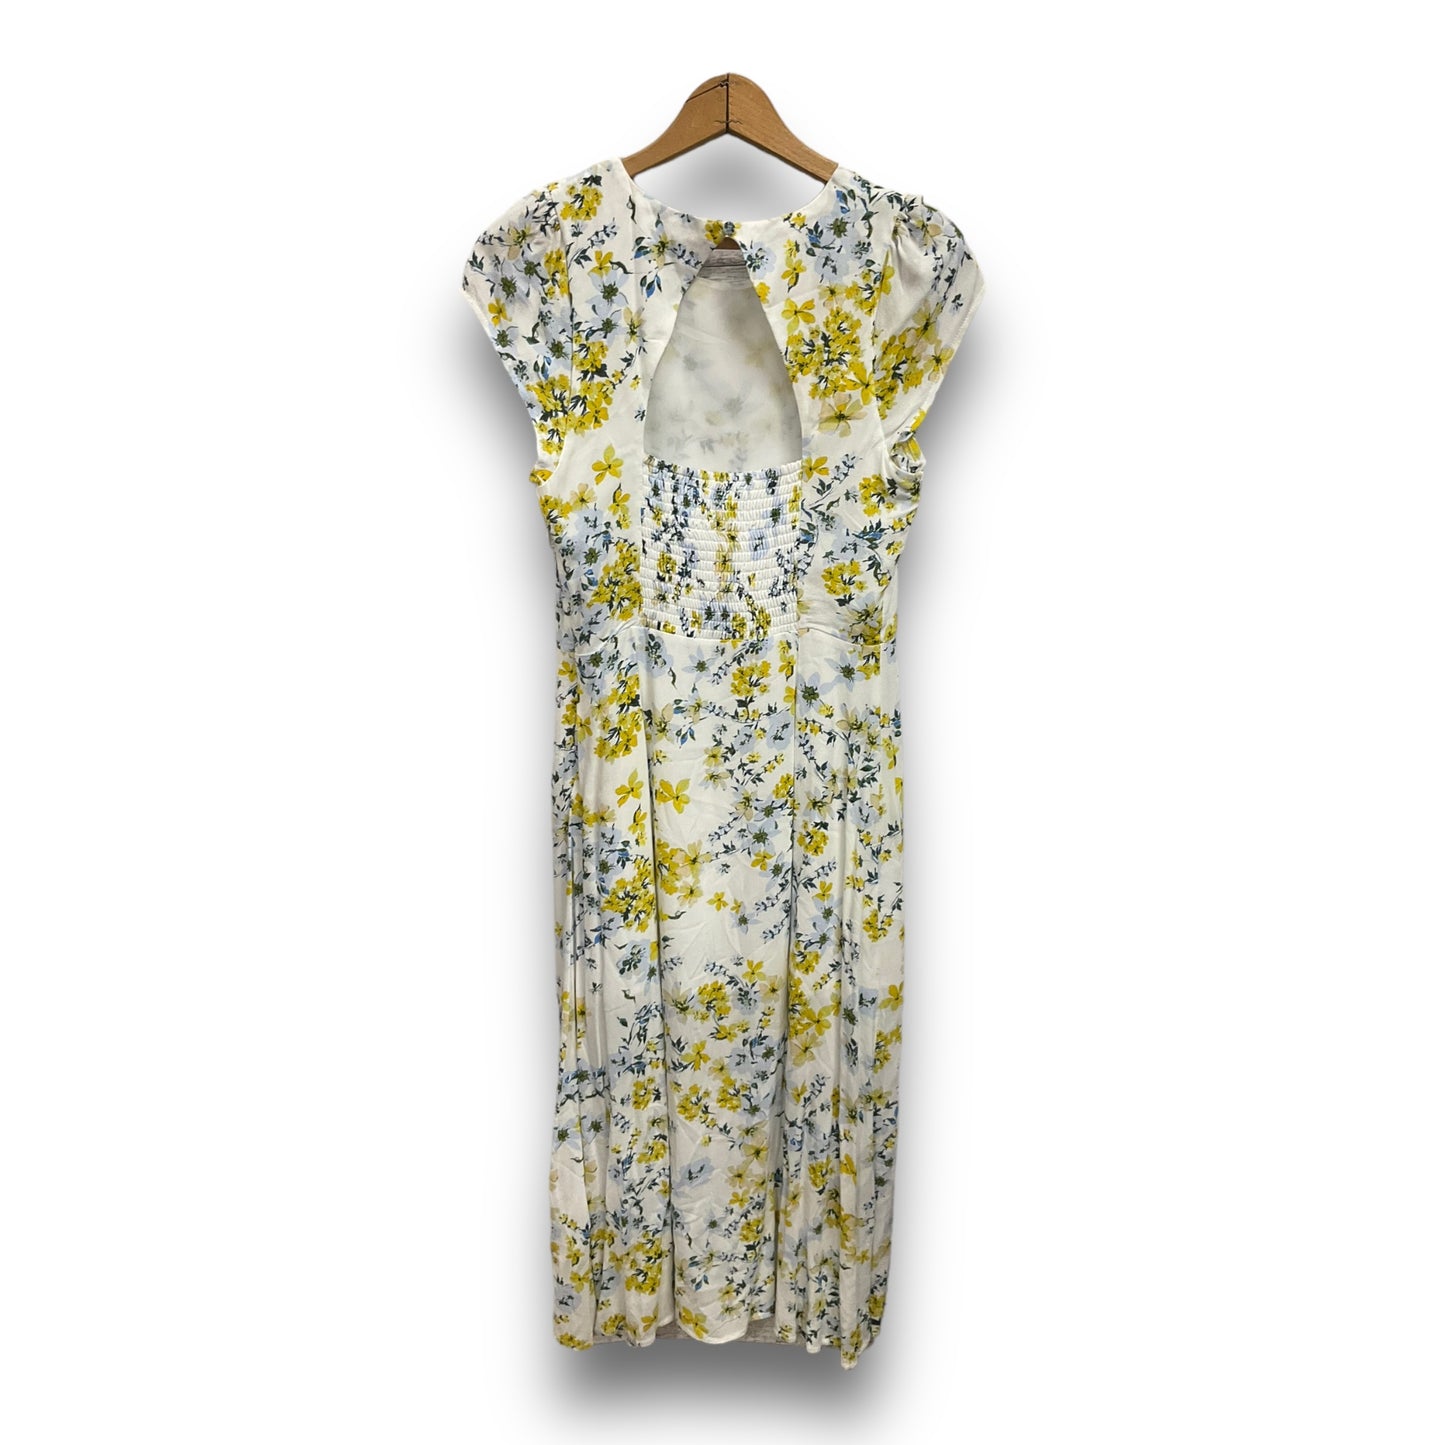 Dress Casual Maxi By Banana Republic  Size: 6